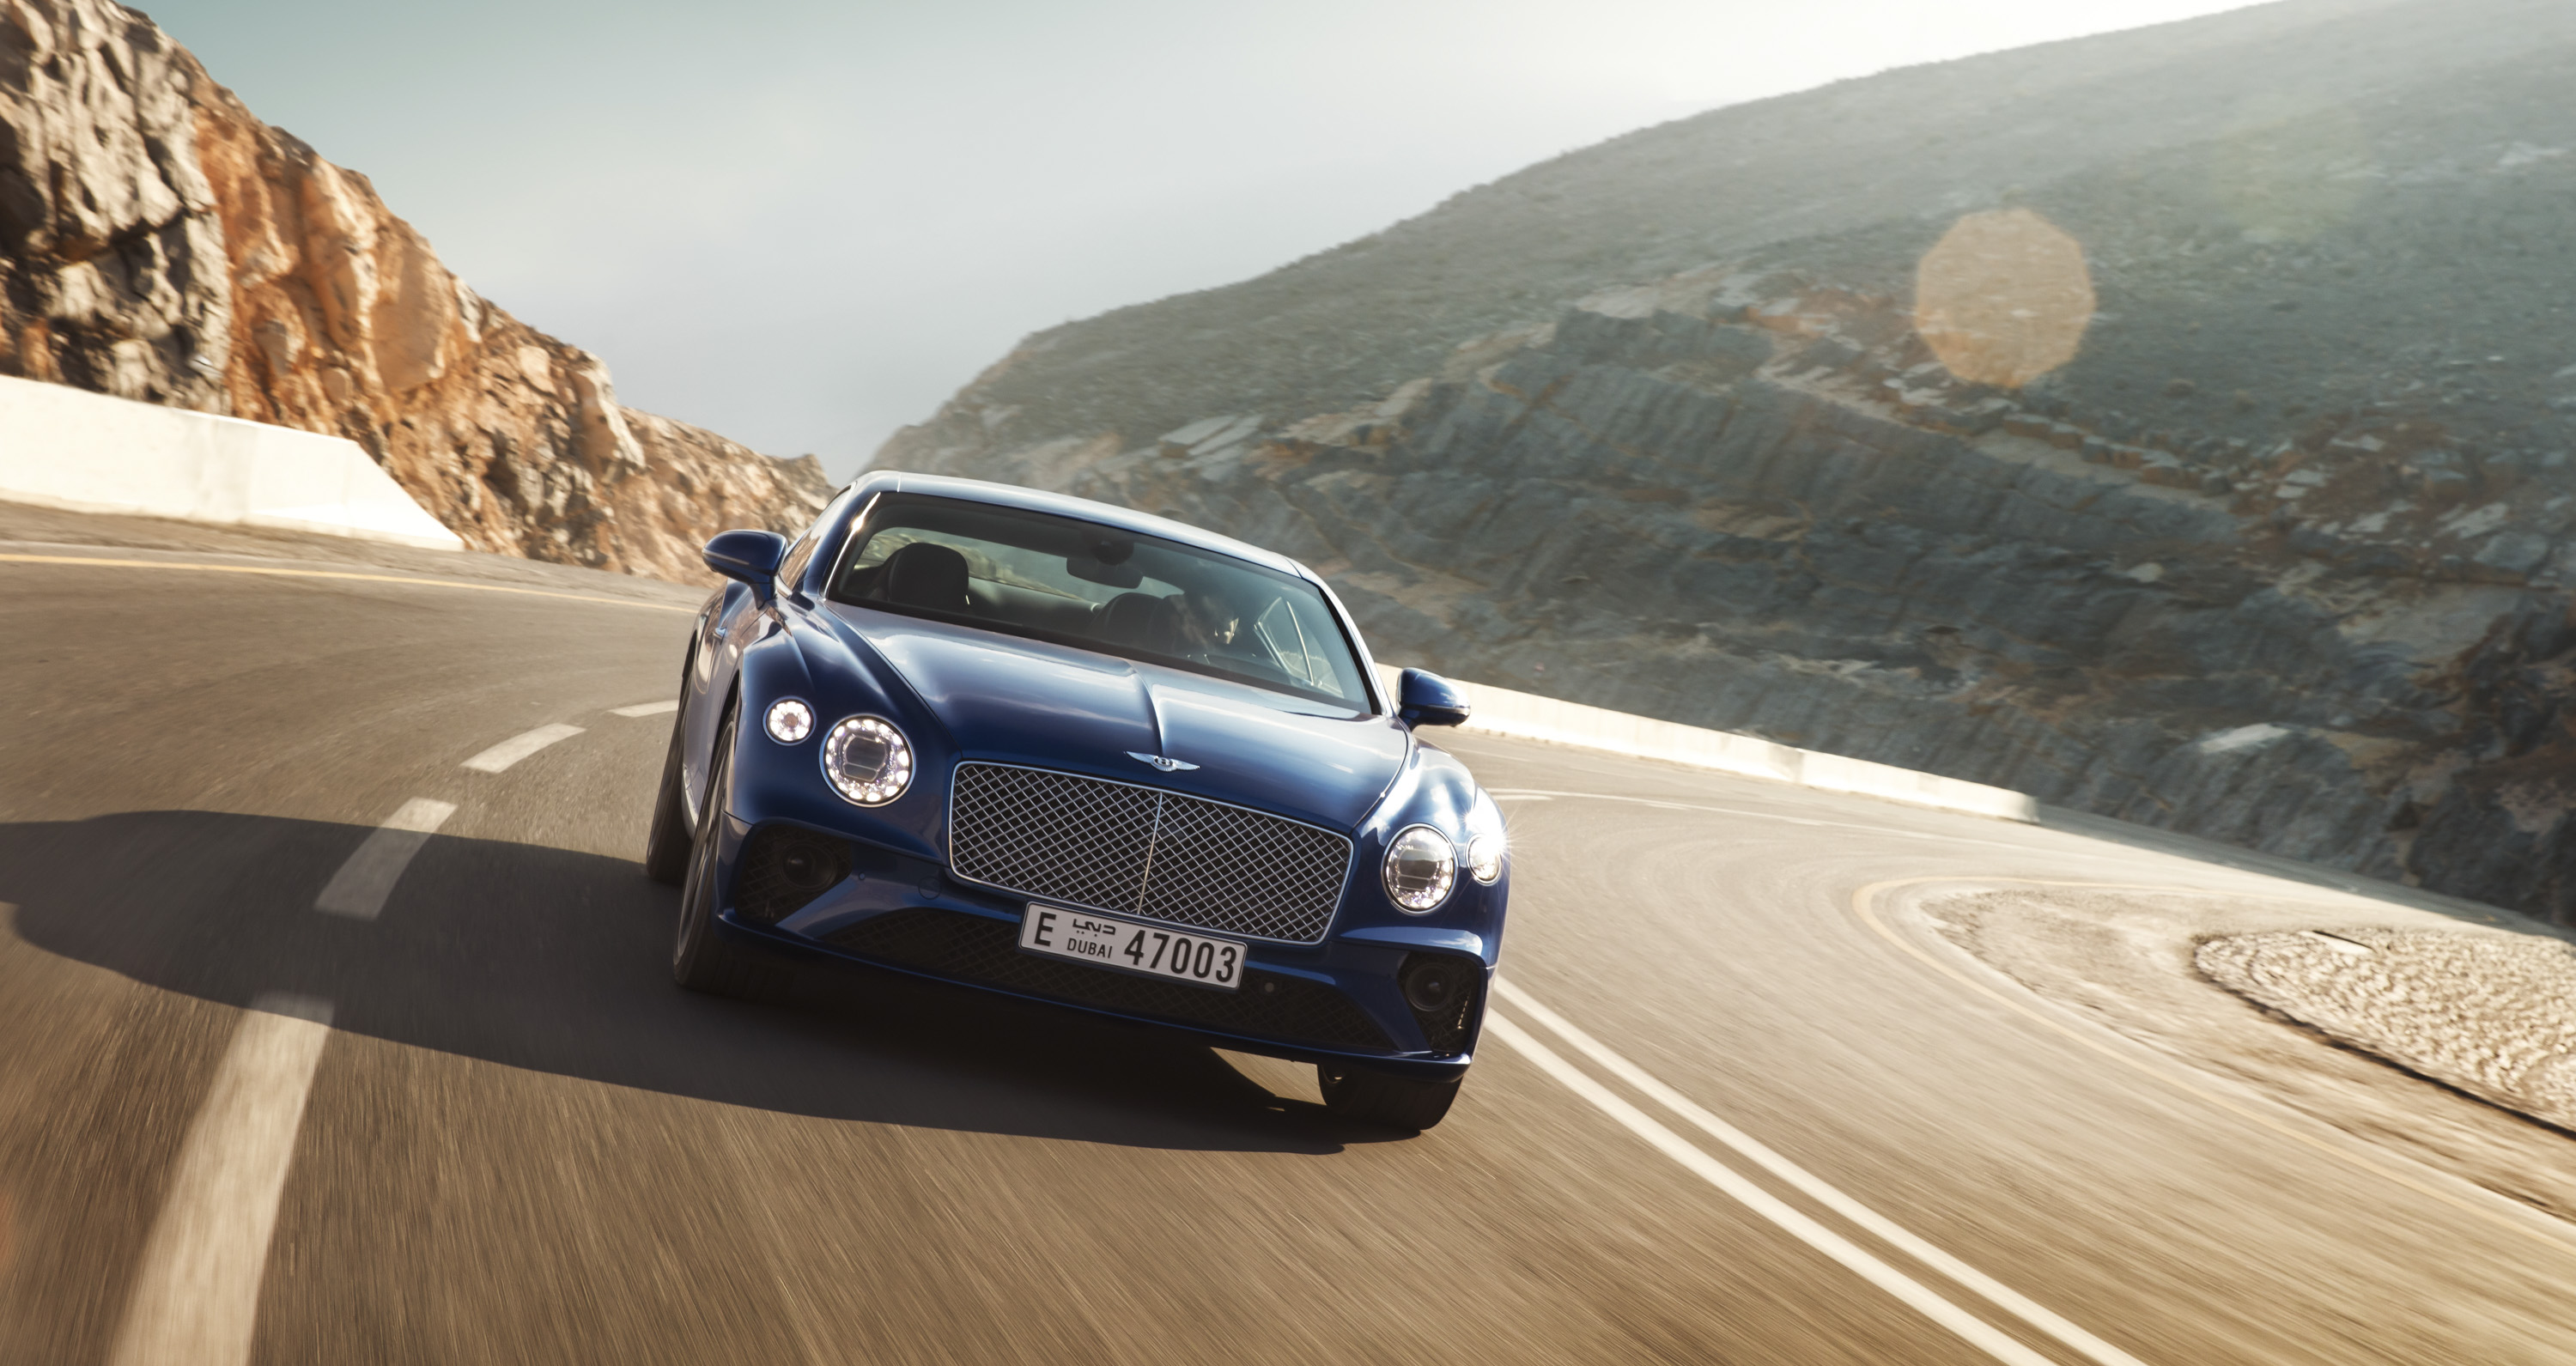 Vozy Bentley jsou symbolem luxusu a kvality